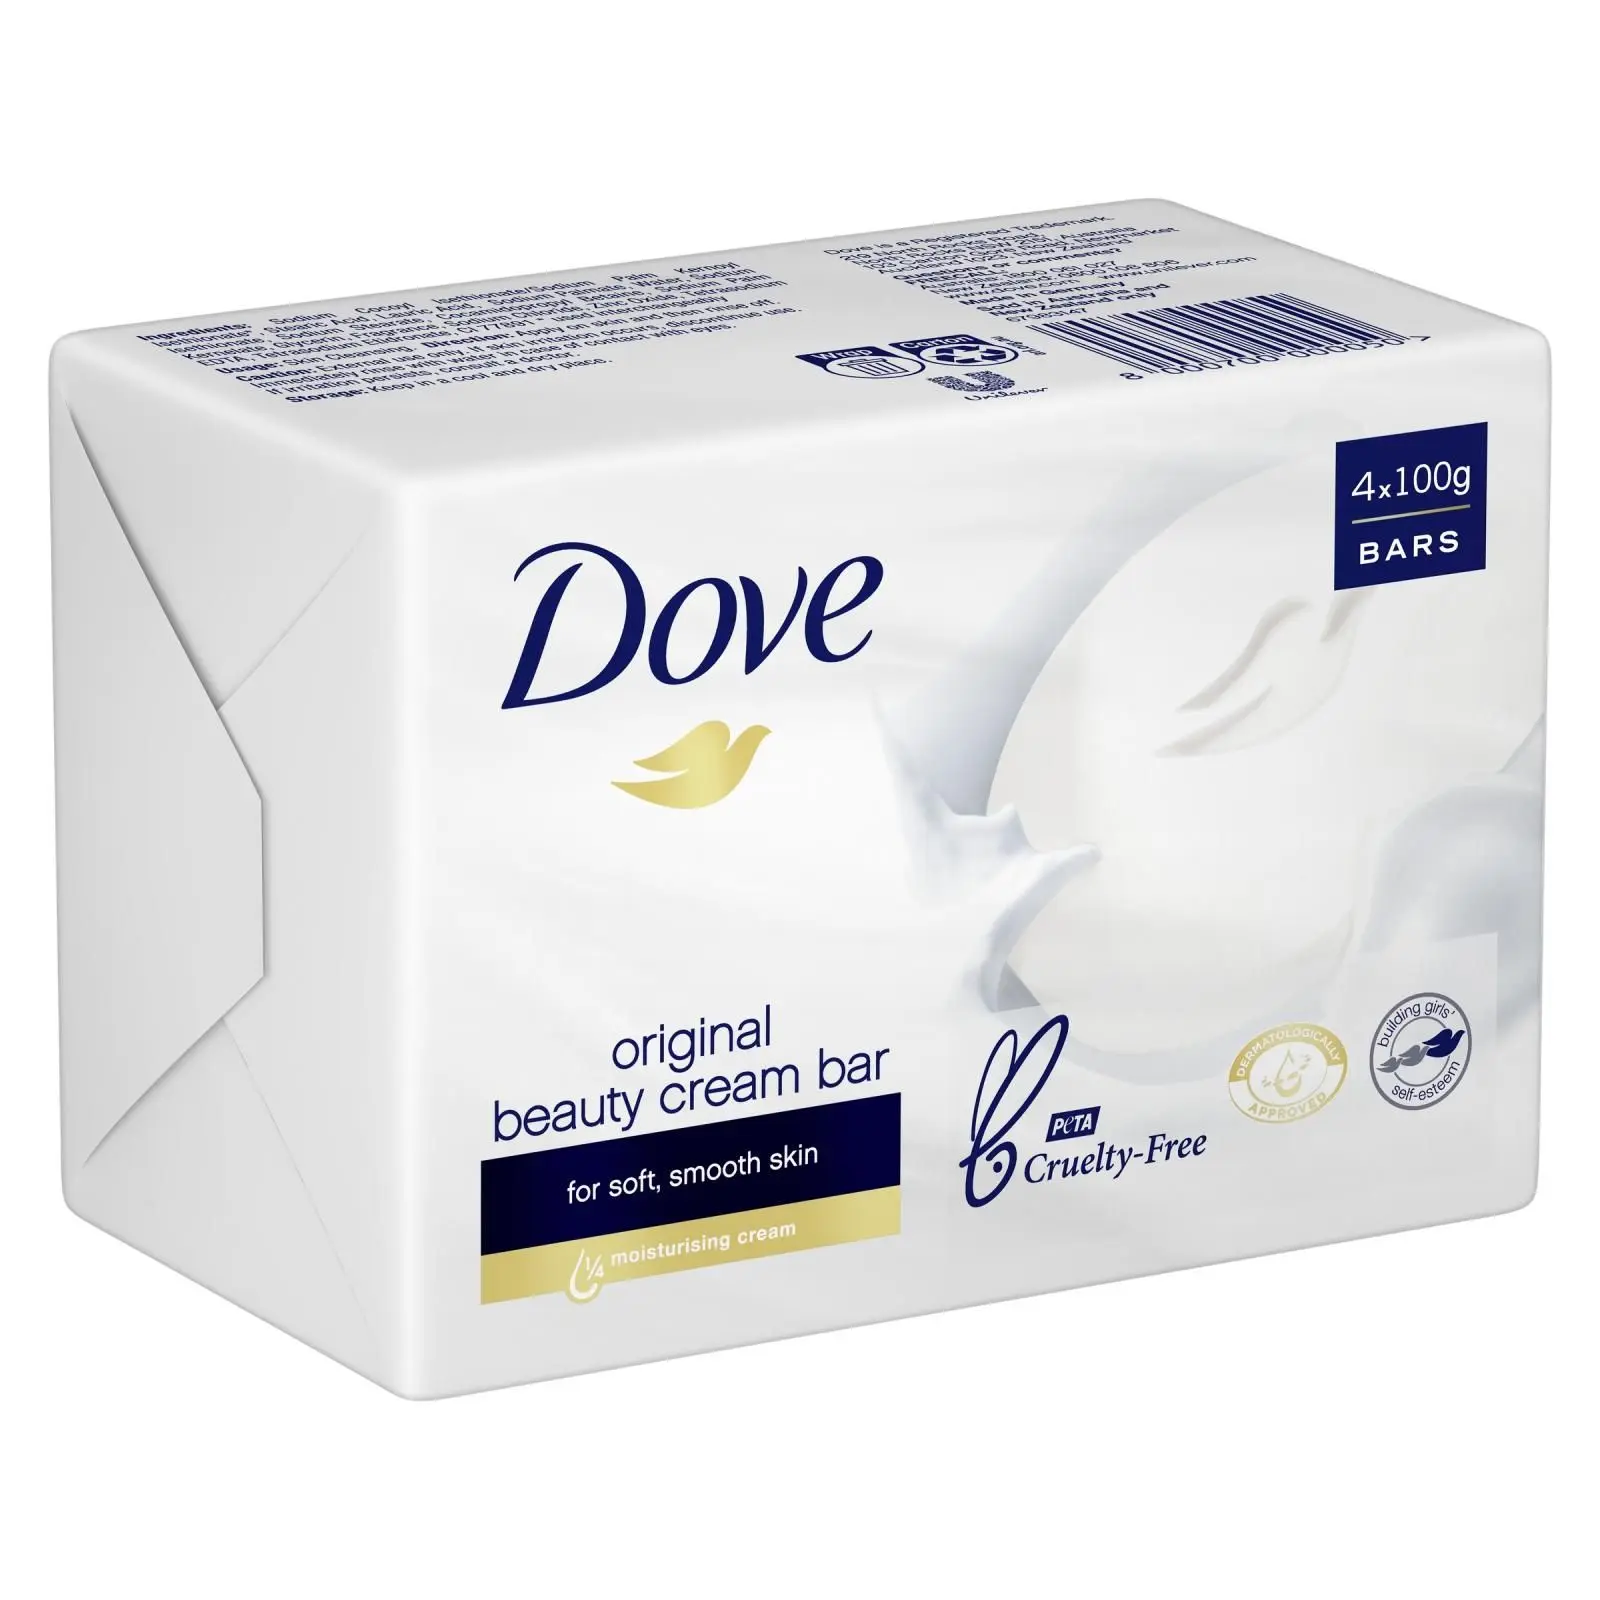 Туалетная мыло дав. Dove Bar Soap Beauty Cream Bar Original 100g. Dove Soap 100g Original. Мыло dove Original 135. Dove Beauty Cream Bar мыло туалетное 100гр.